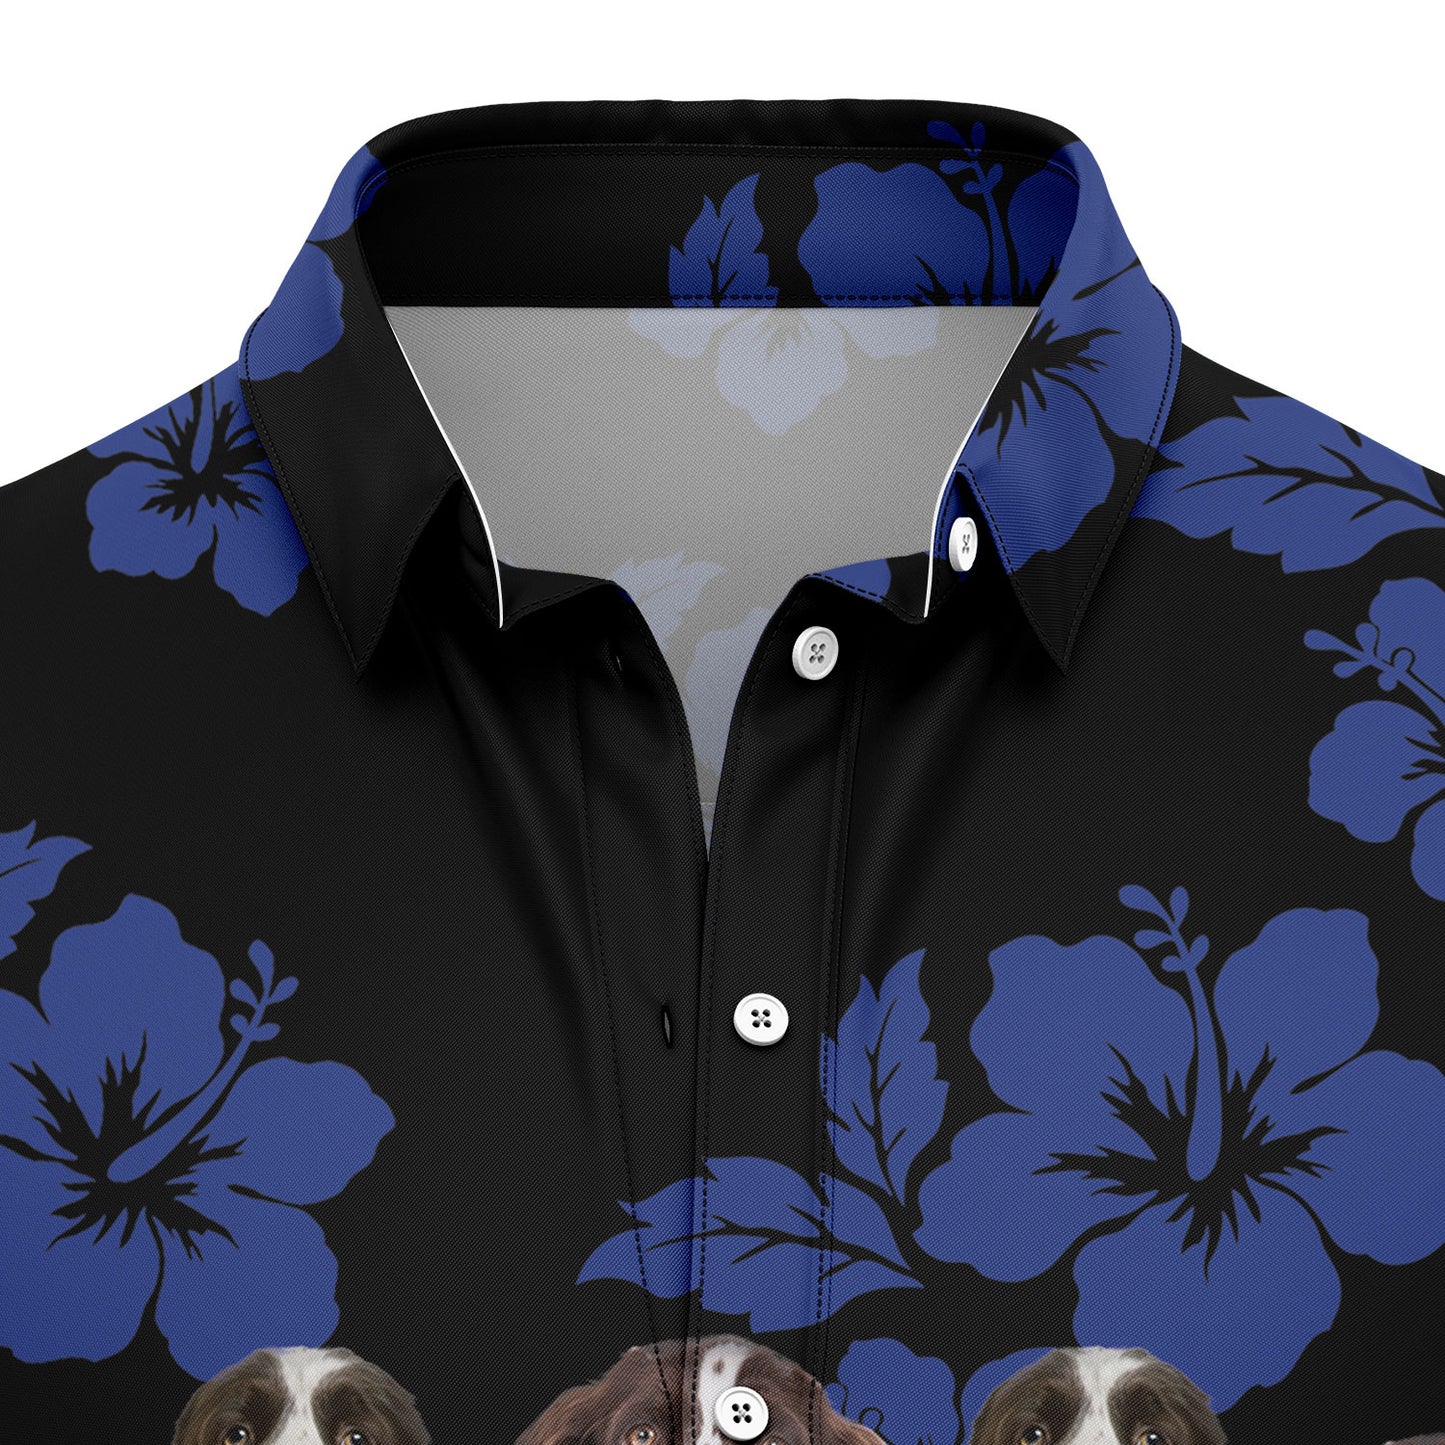 Awesome English Springer Spaniel TG5721 Hawaiian Shirt